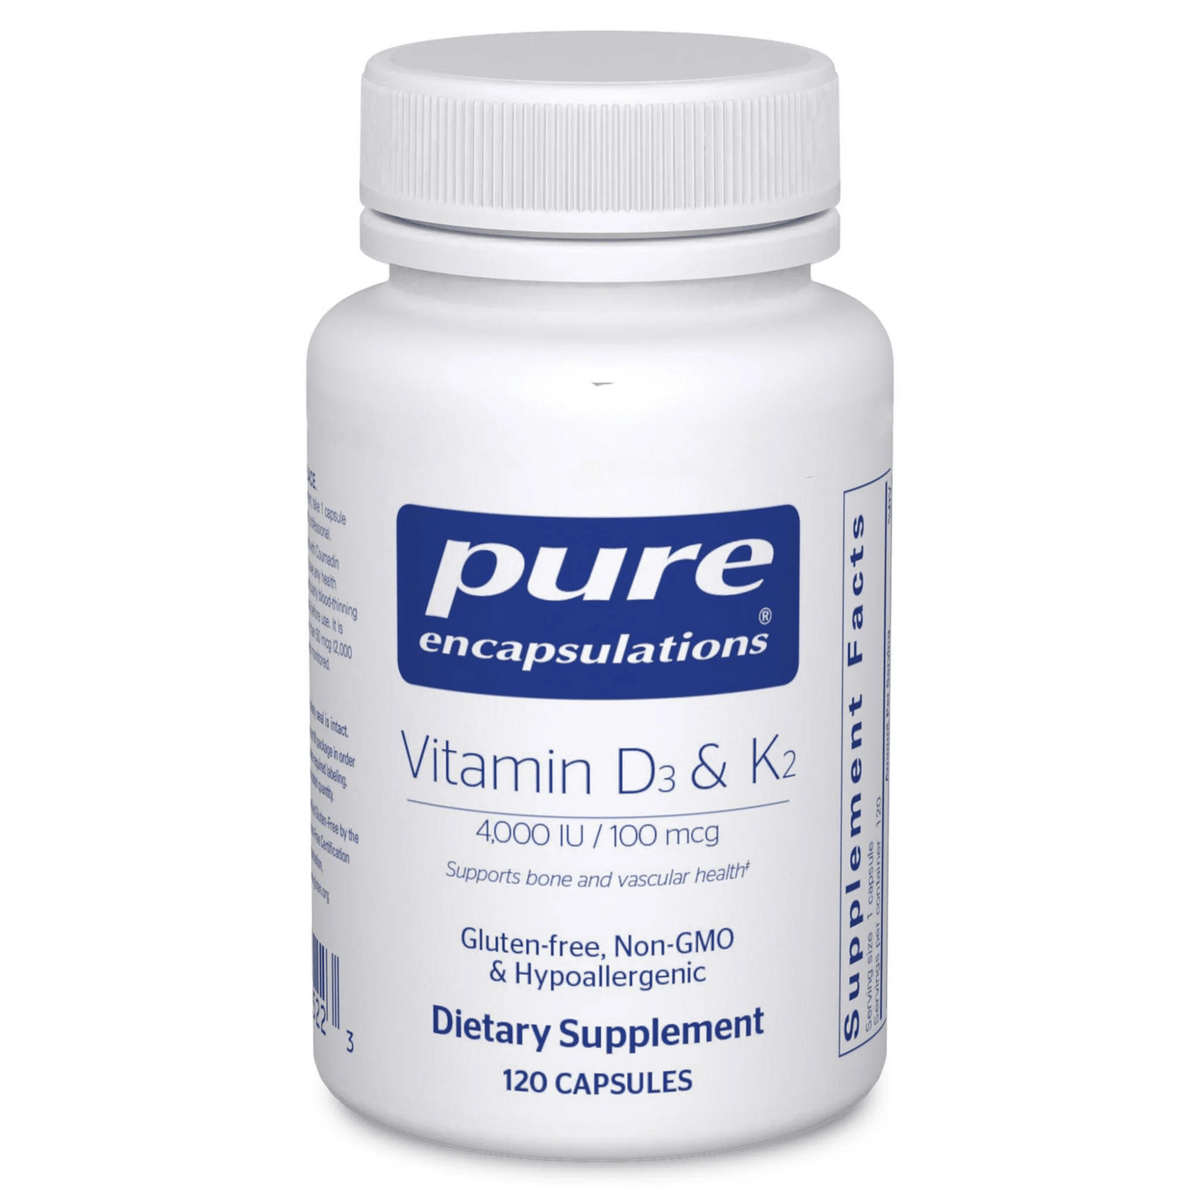 Primary Image of Vitamin D3 & K2 Capsules